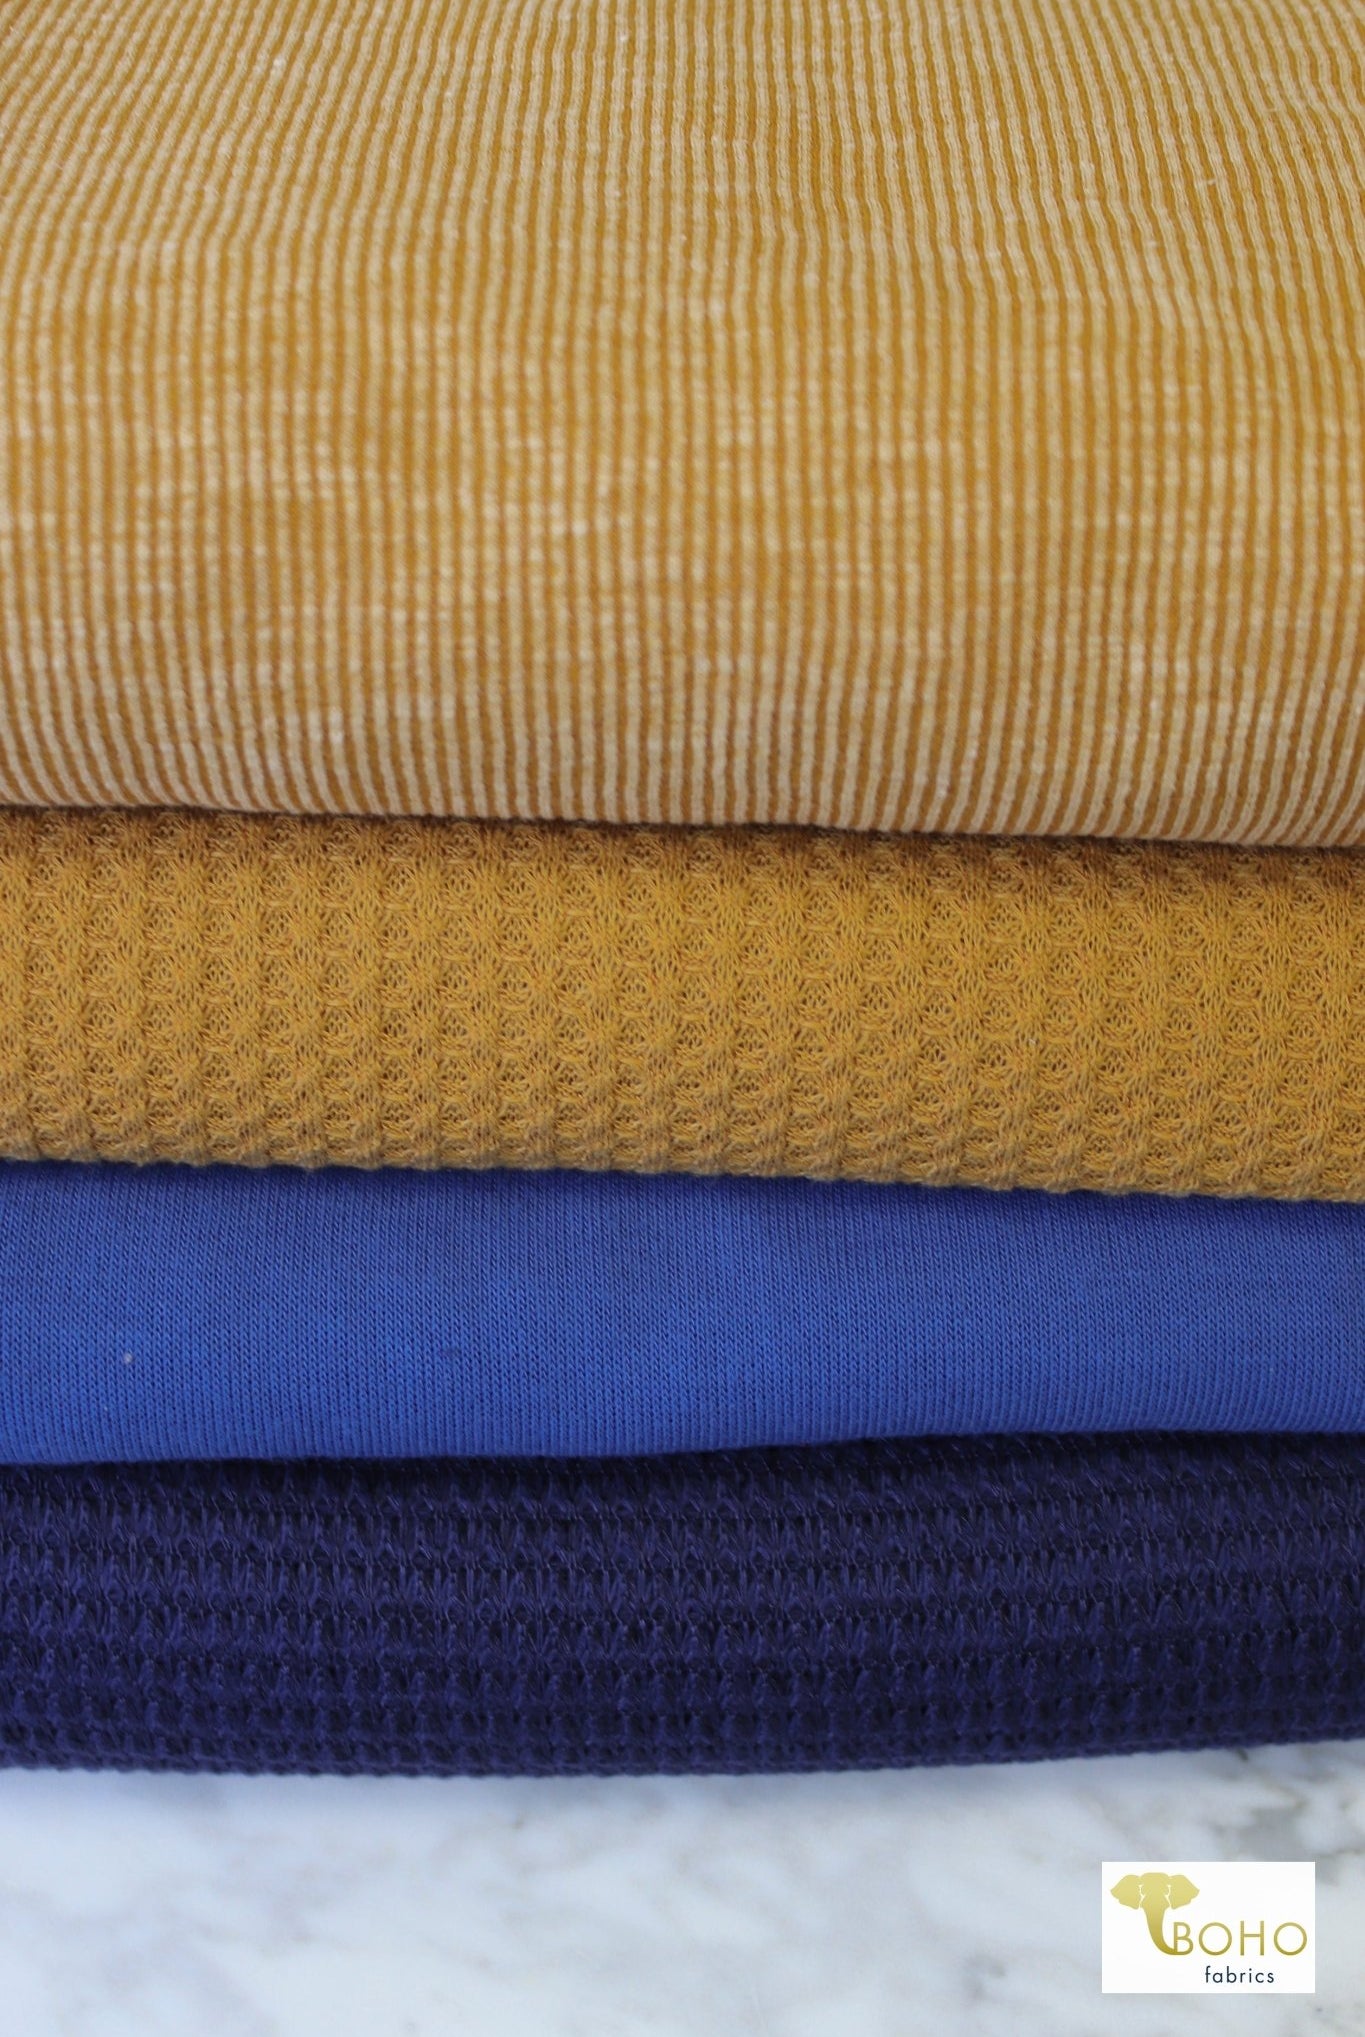 CM Bundle Stocking! Blueberry Pie, Sweater Knit Bundle CB-SWTR-07 - Boho Fabrics